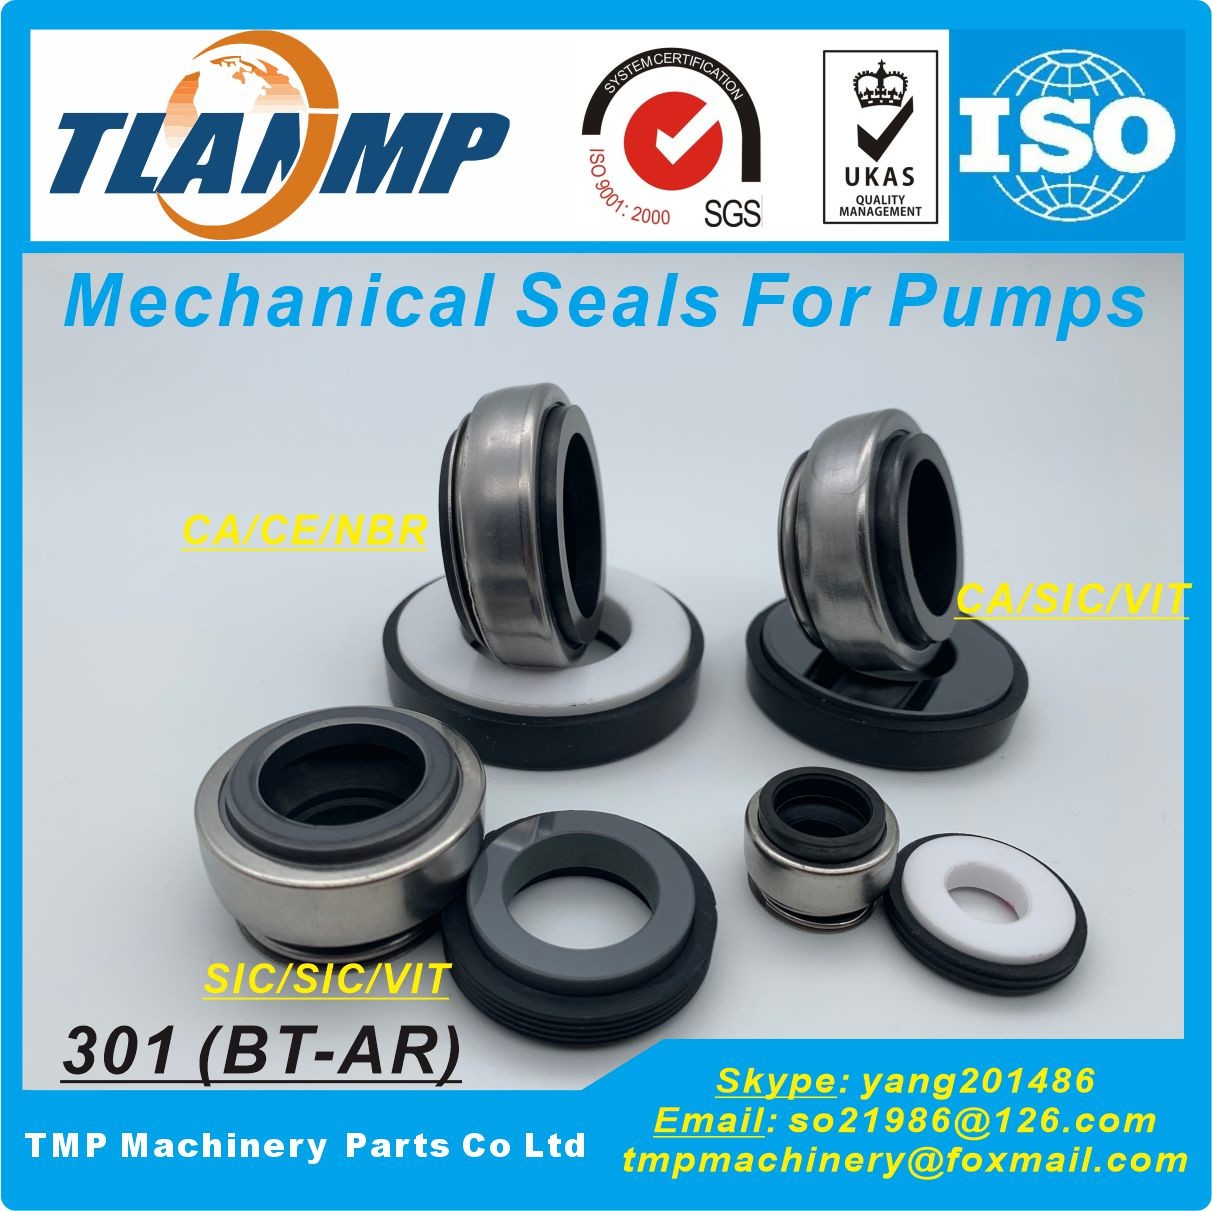 301-24 ( BT-AR-24 ) TLANMP Mechanical Seals For Pumps (d3=47mm)|Equivalent to  BT-AR Seals